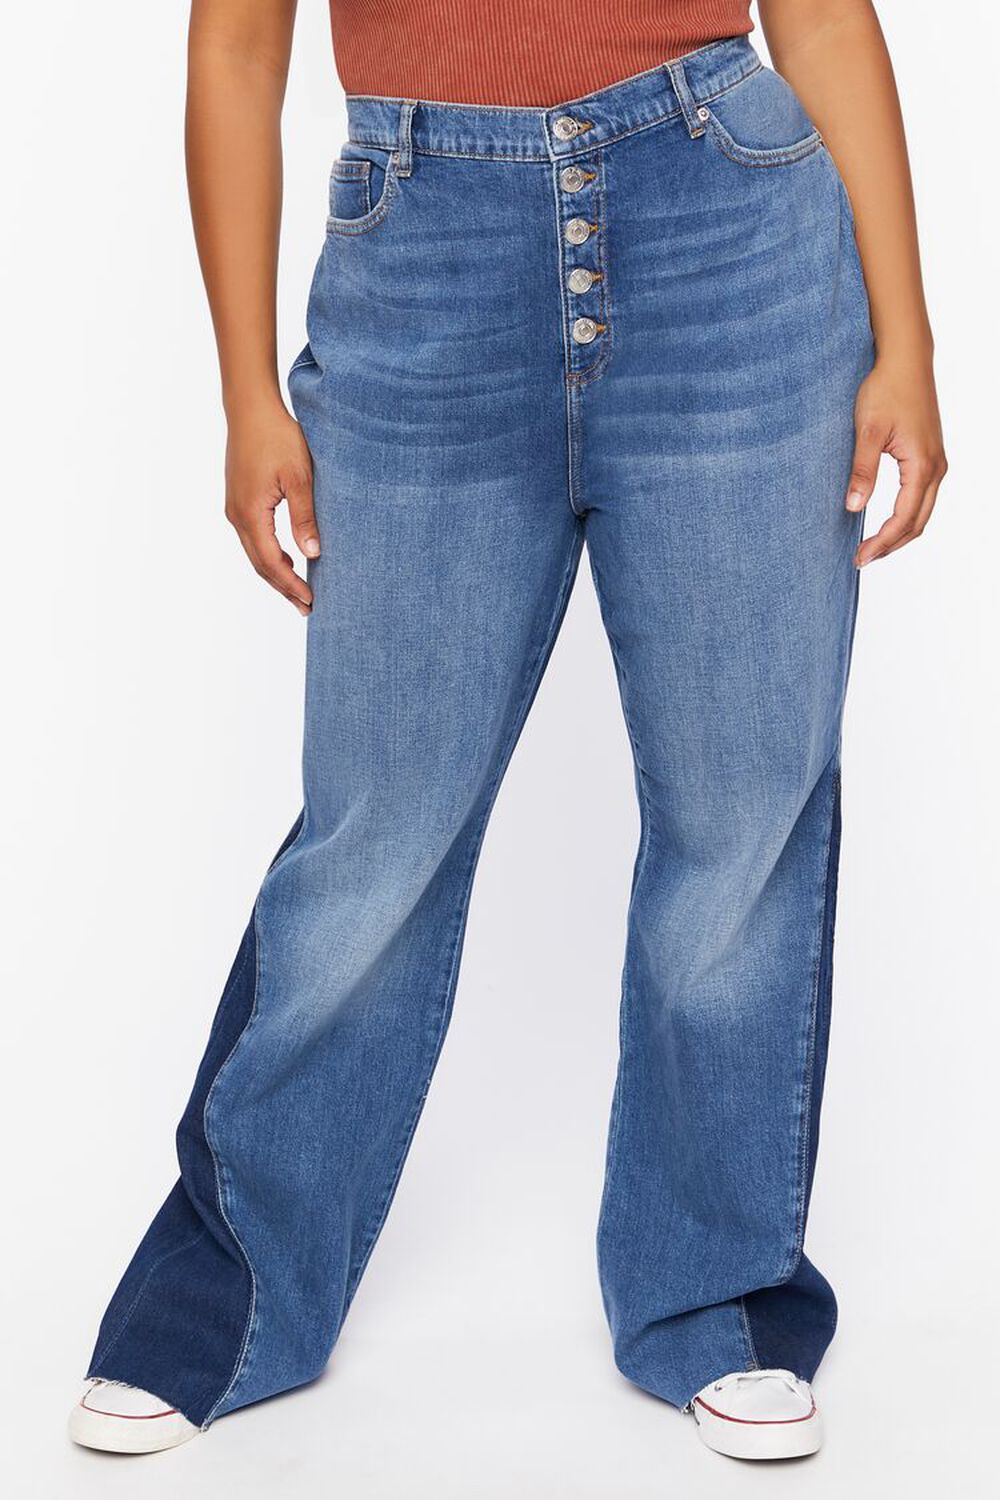 MEDIUM DENIM Plus Size Reworked Flare Jeans, image 2